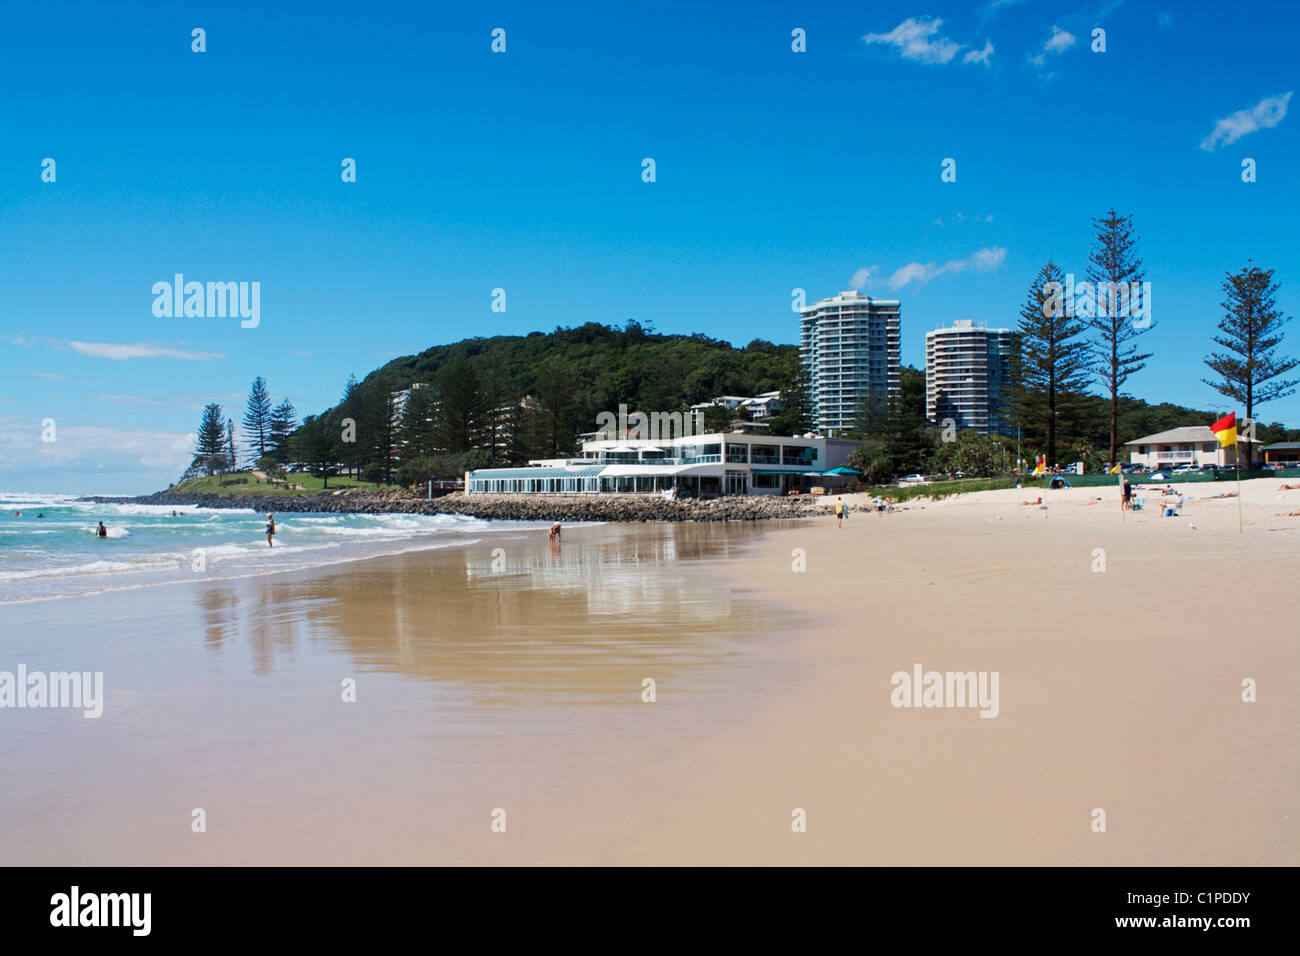 Australia, Burleigh Heads, hotels and restaurant on beach Stock Photo